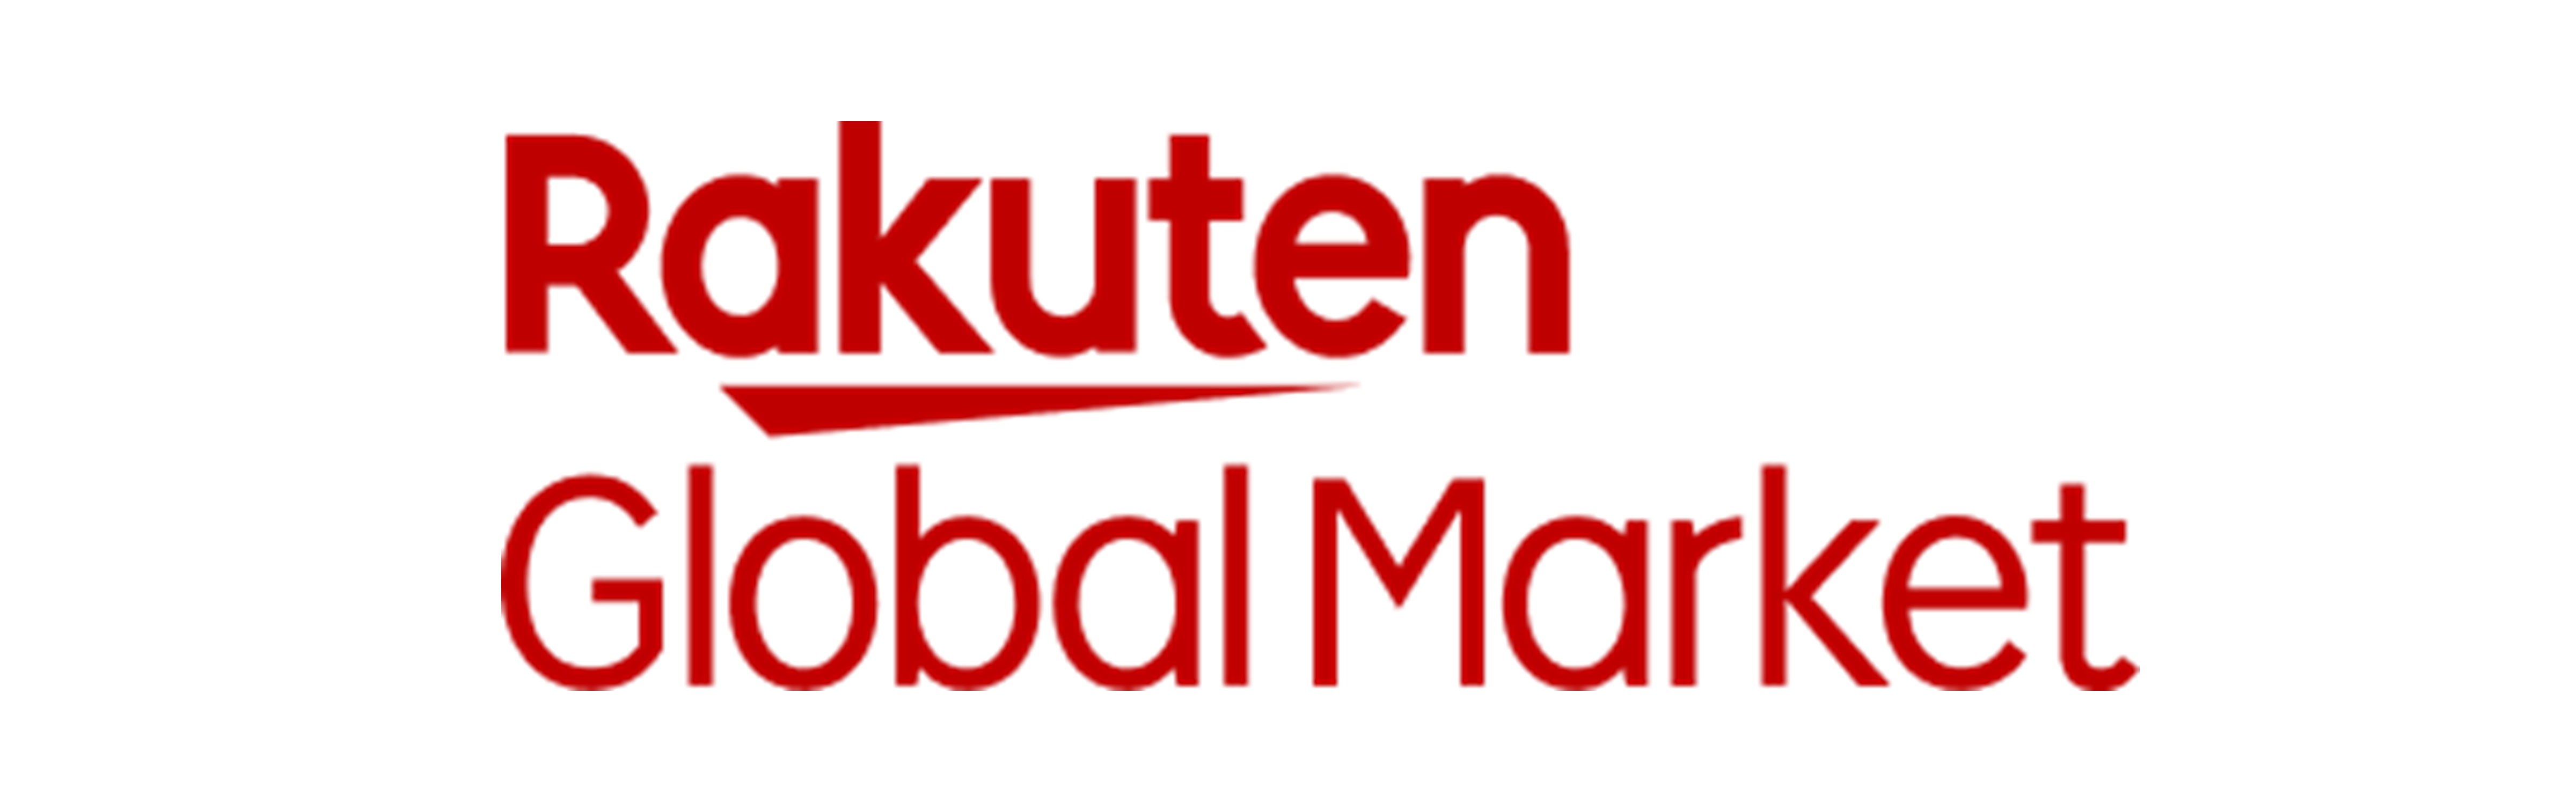 How to Buy Goods from Japan on Rakuten Global Market Overseas?